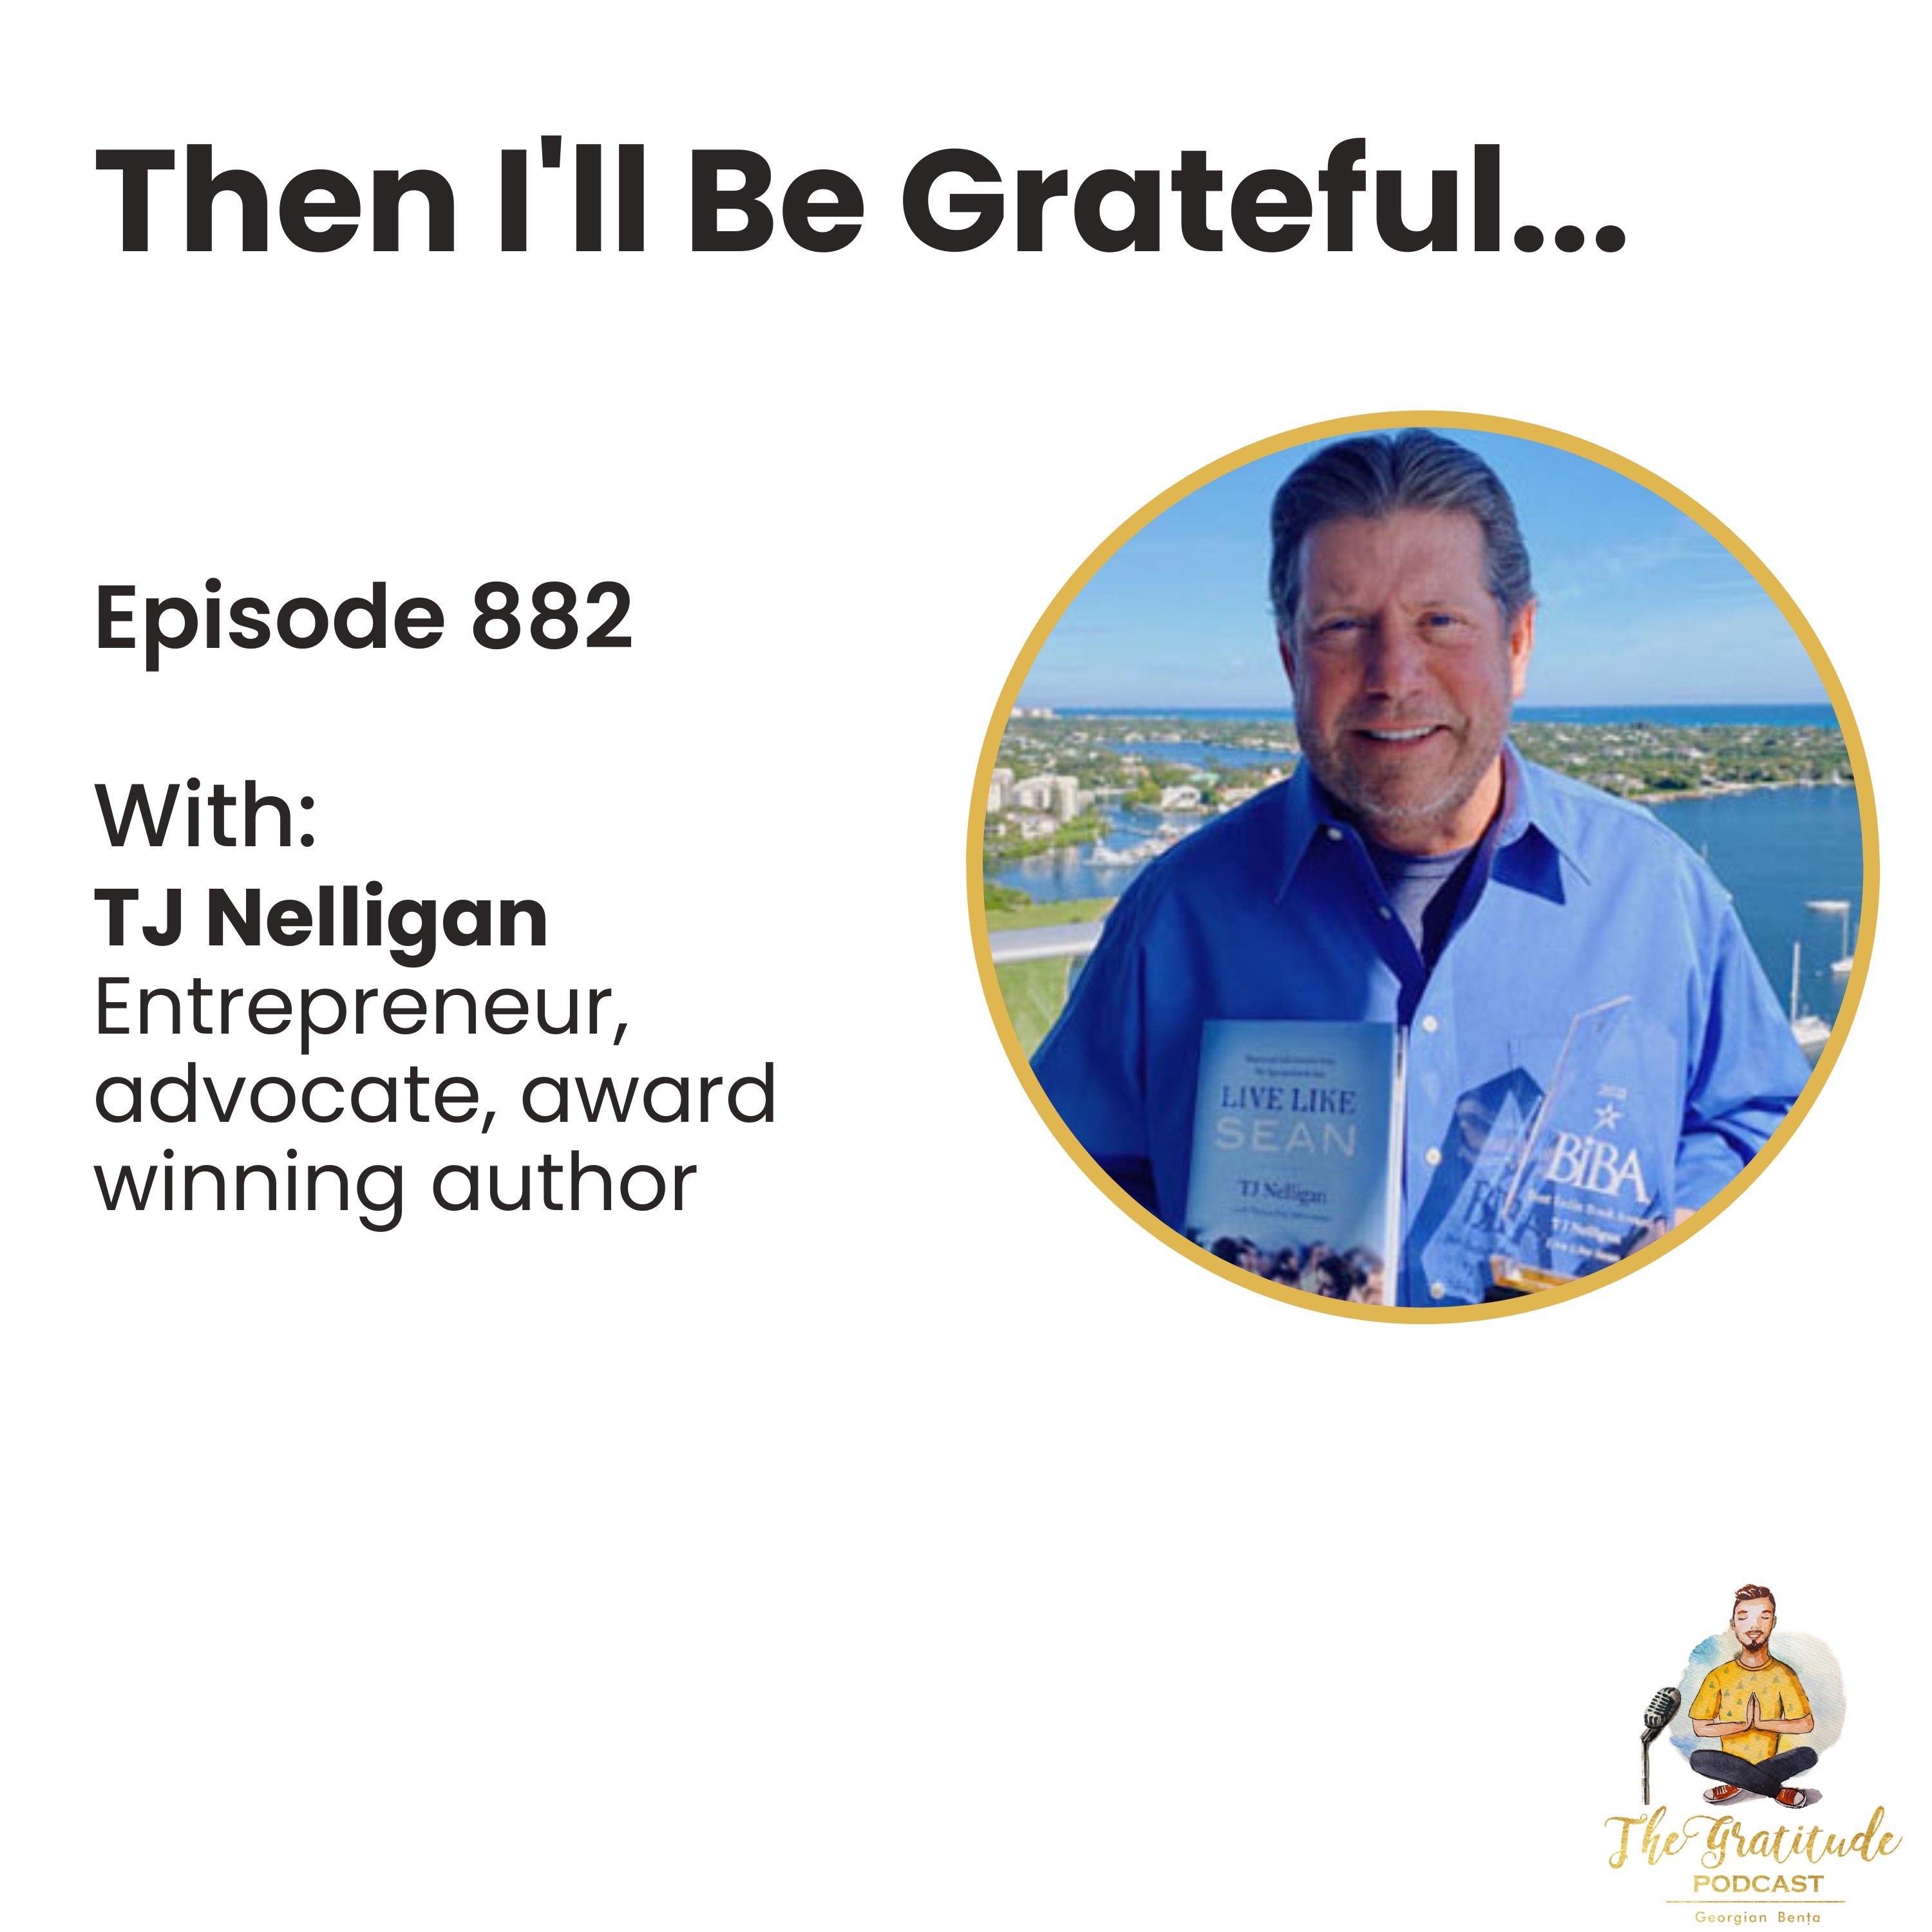 Then I'll Be Grateful... - TJ Nelligan (ep. 882)